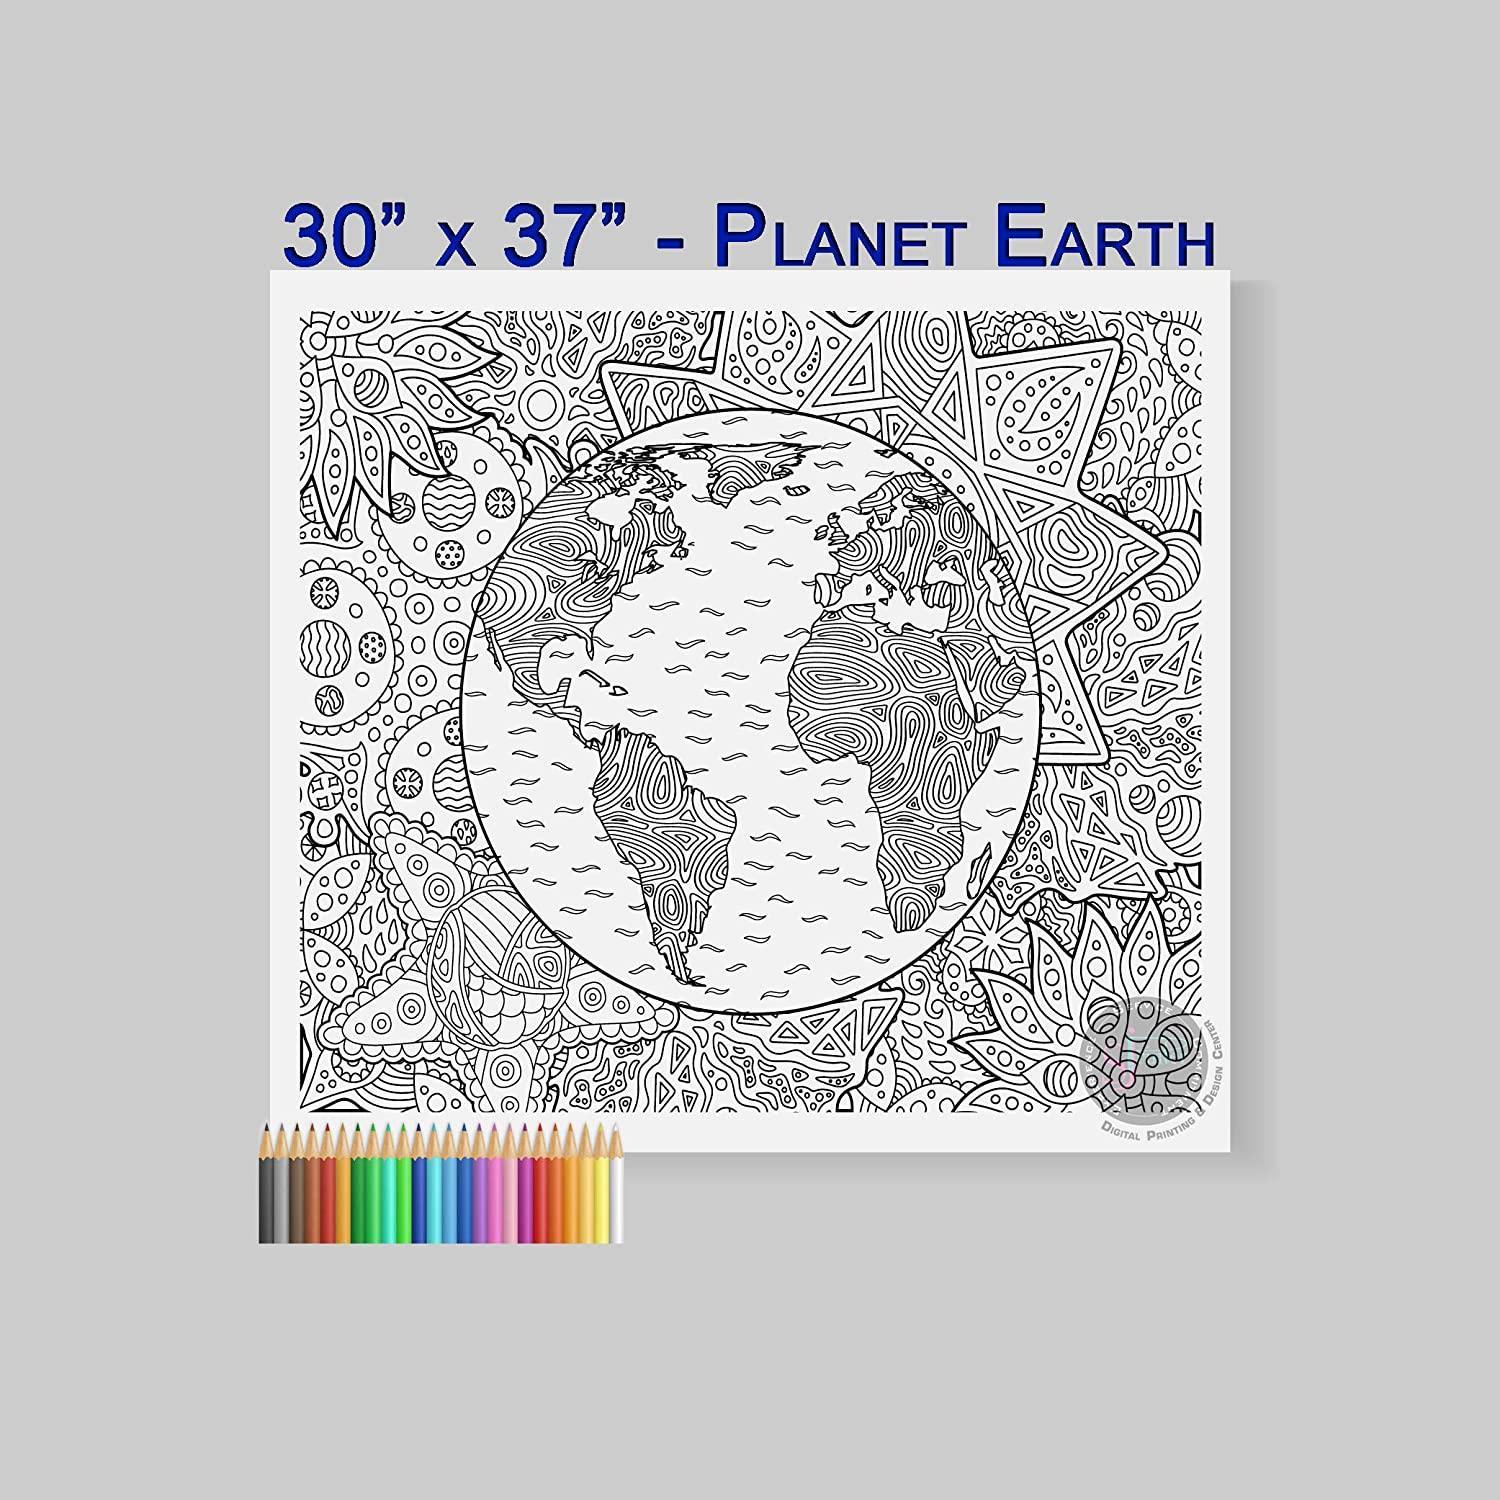 Planet Earth - 30" x 37" - SJPrinter 